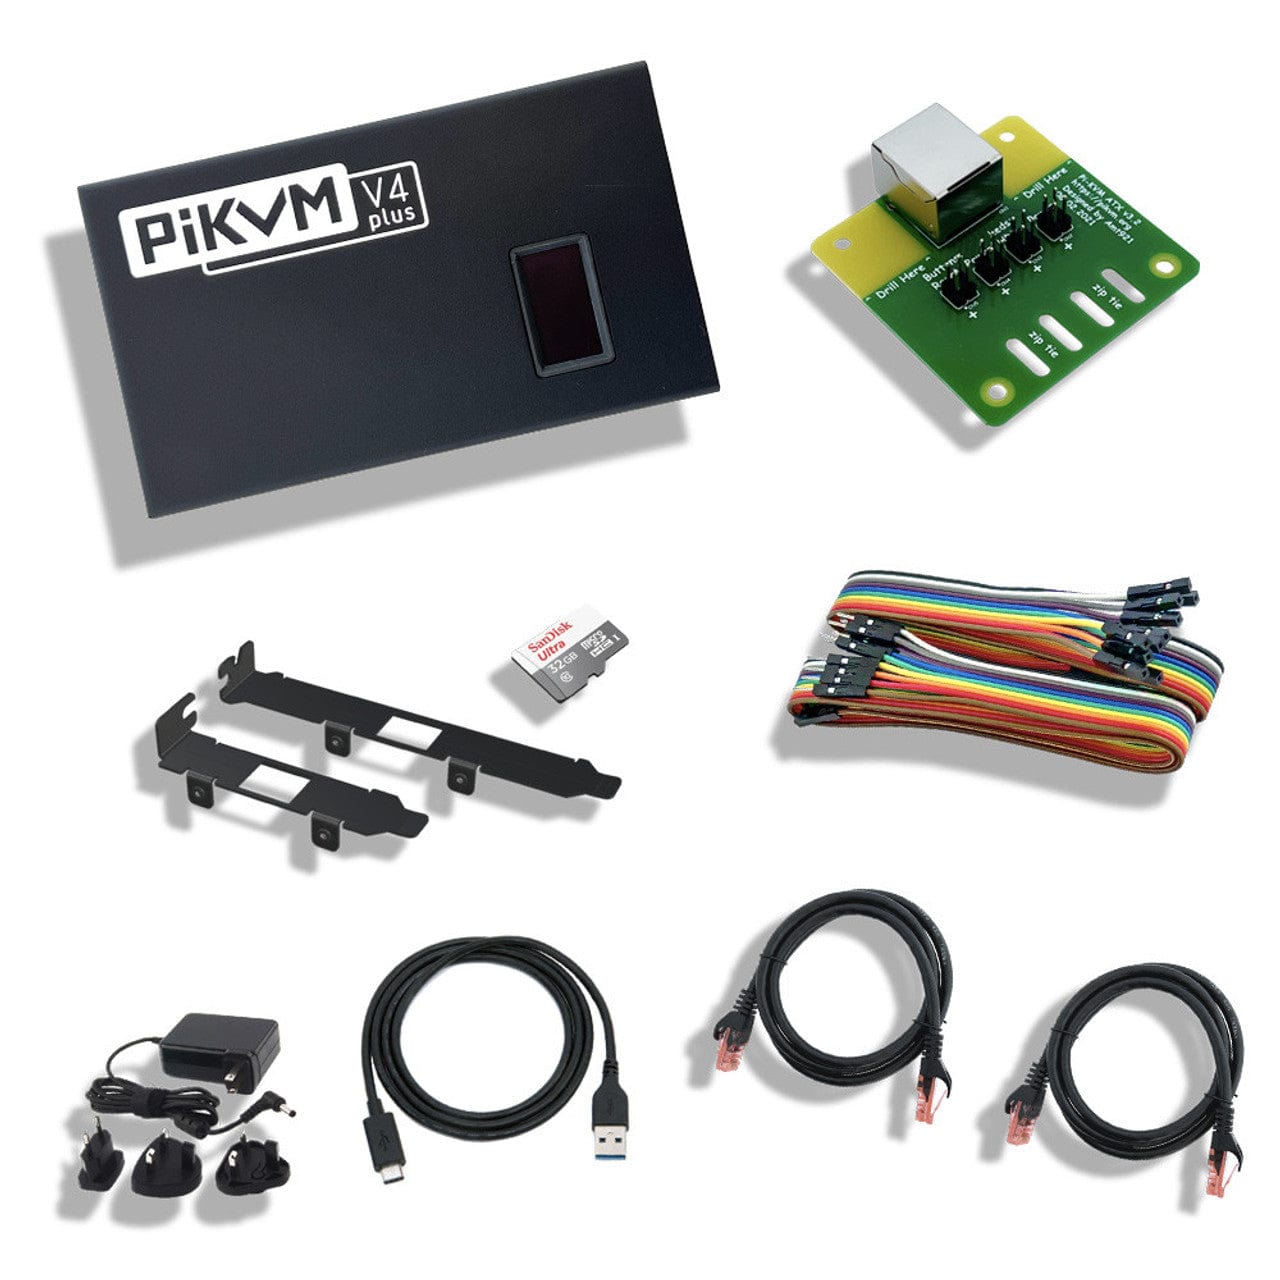 PiKVM V4 Plus - The Pi Hut